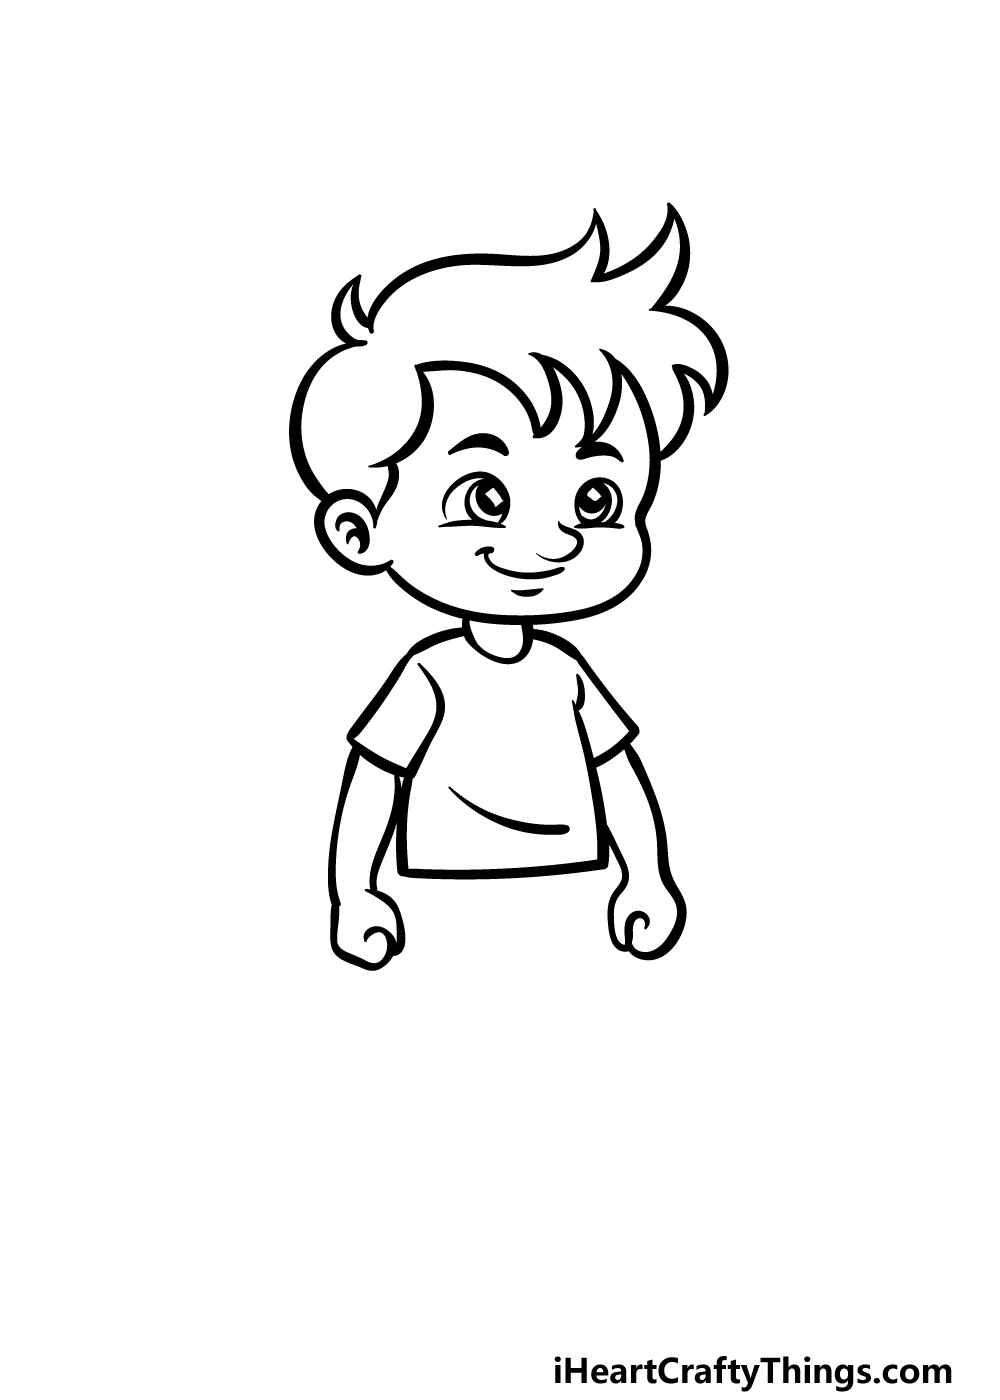 how to draw a cartoon boy step 3